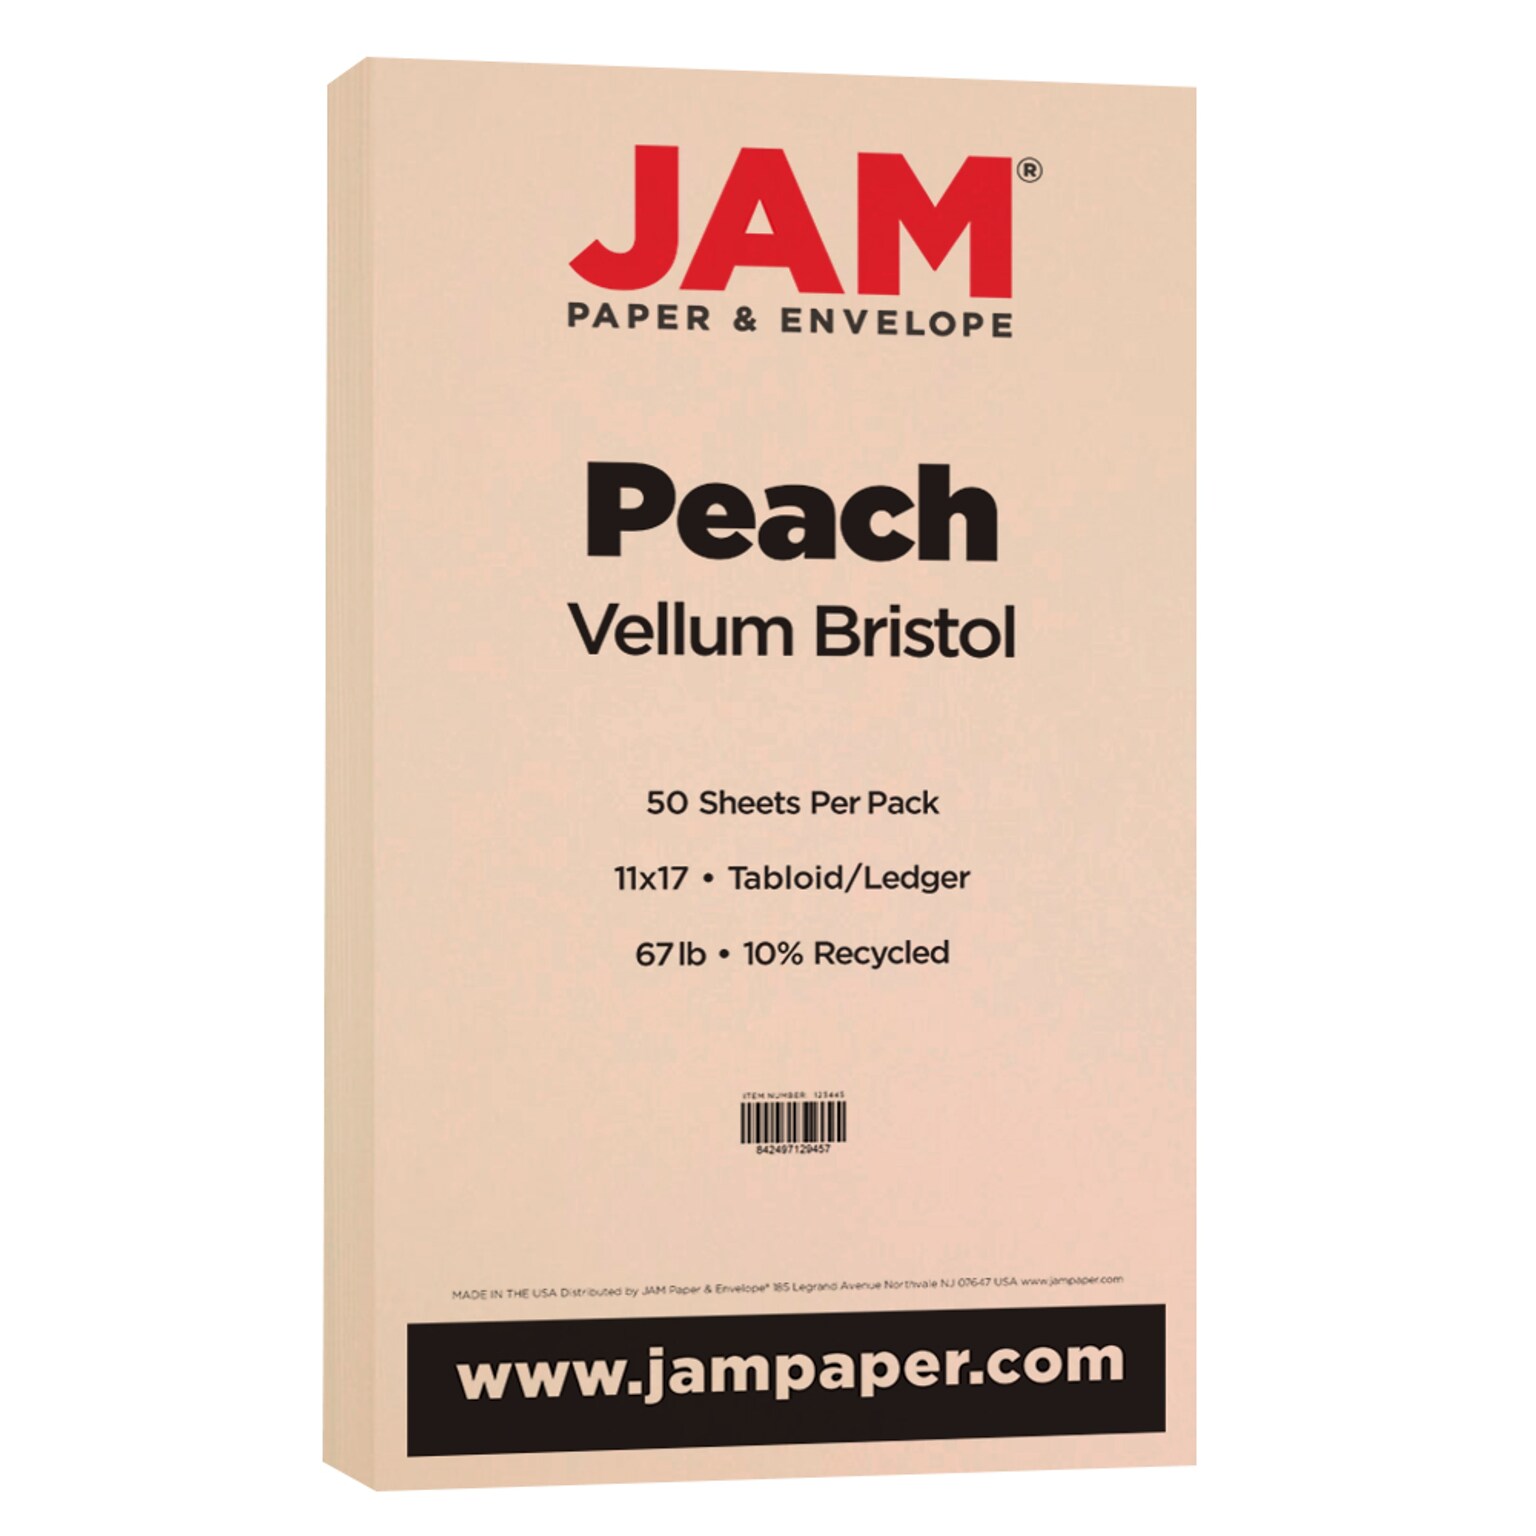 JAM Paper Vellum Bristol 67 lb. Cardstock Paper, 11 x 17, Peach Pink, 50 Sheets/Pack (16932839)